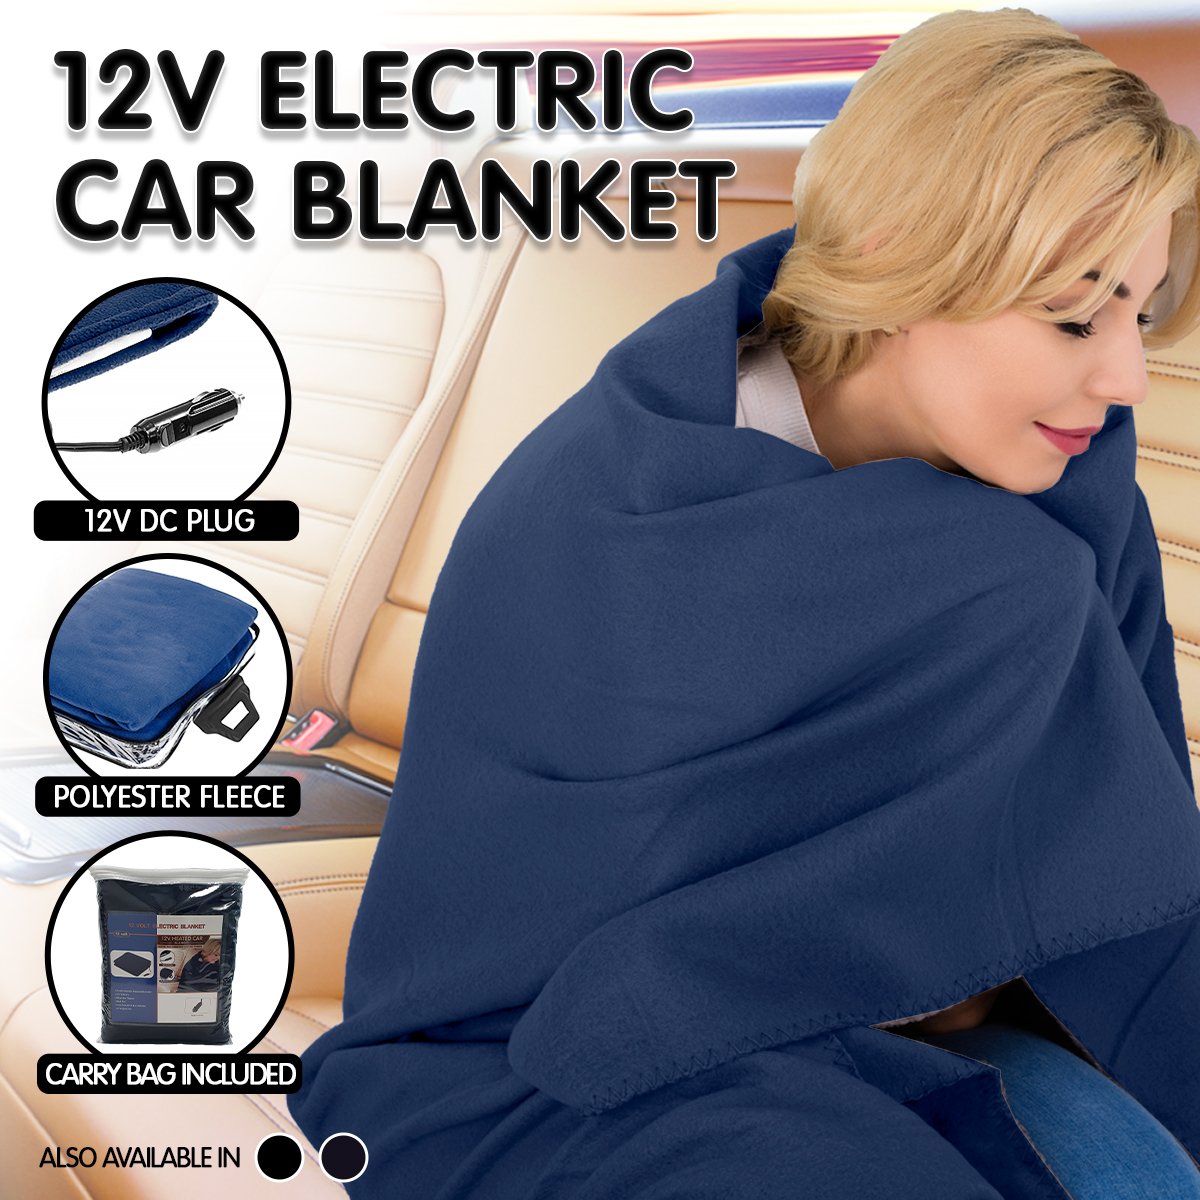 Heated Electric Car Blanket 150x110cm 12V - Navy Blue 2